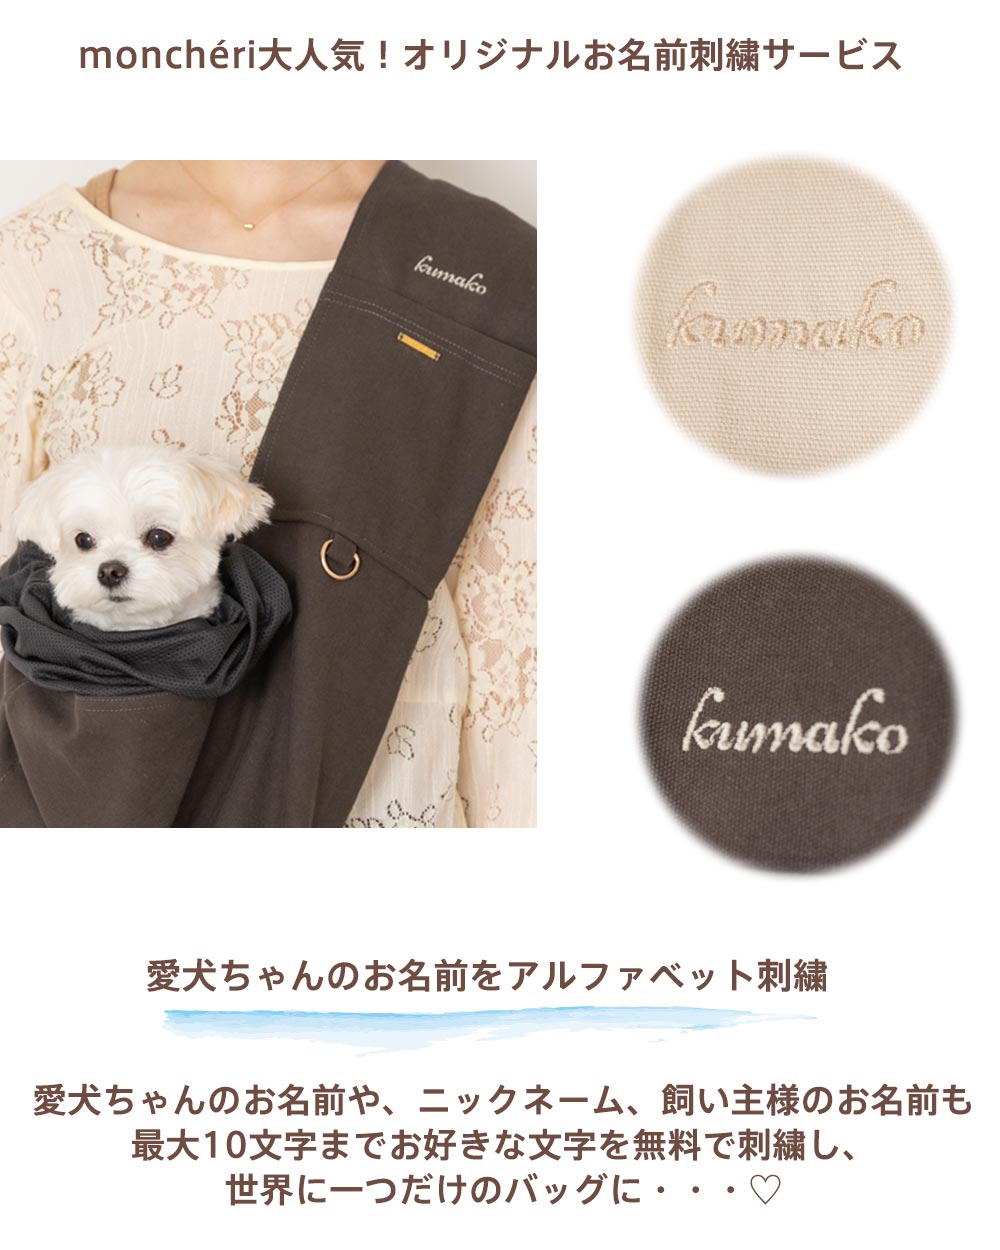 Small dog/carry back/sling/hug string/fashion/mesh/name embroidery/embroidery/embroidery service